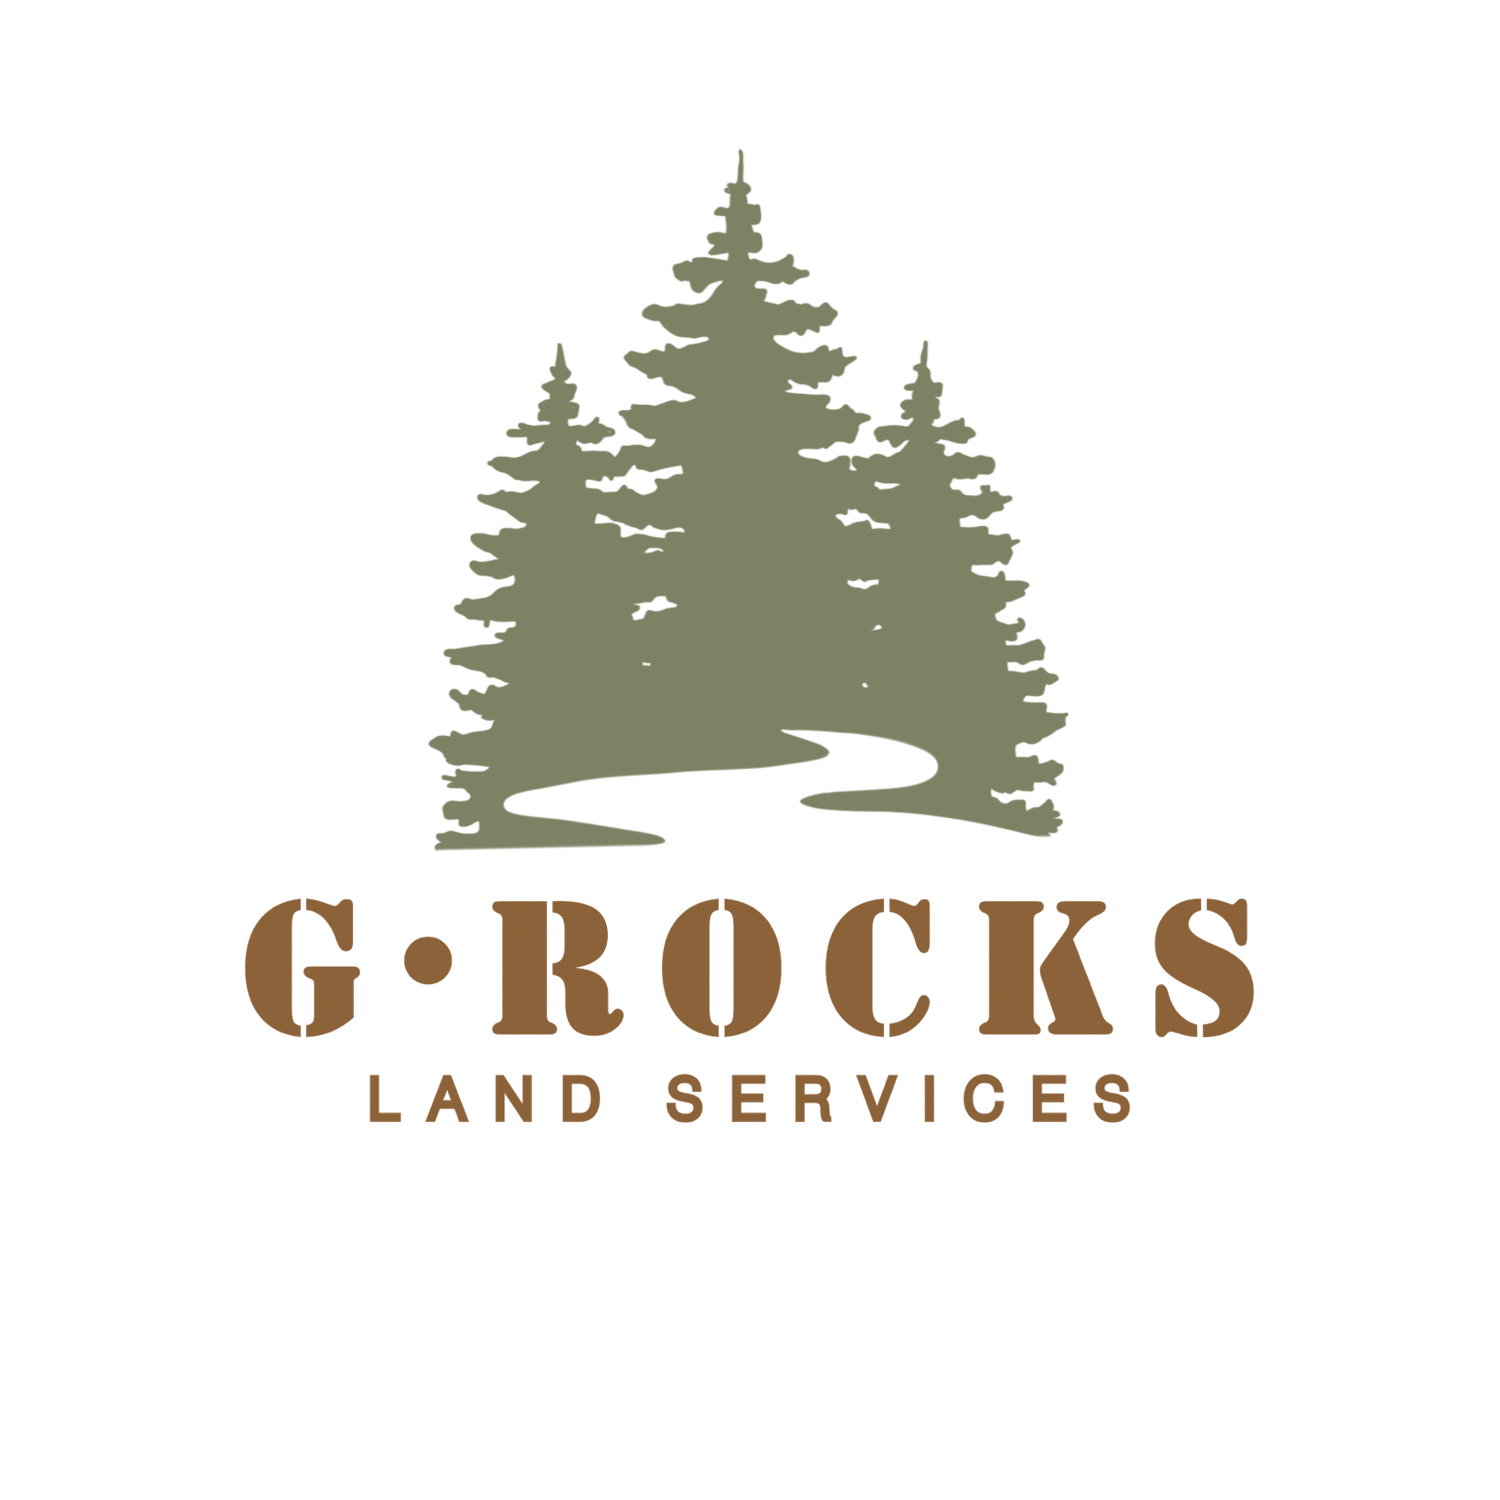 G Rocks Land Services